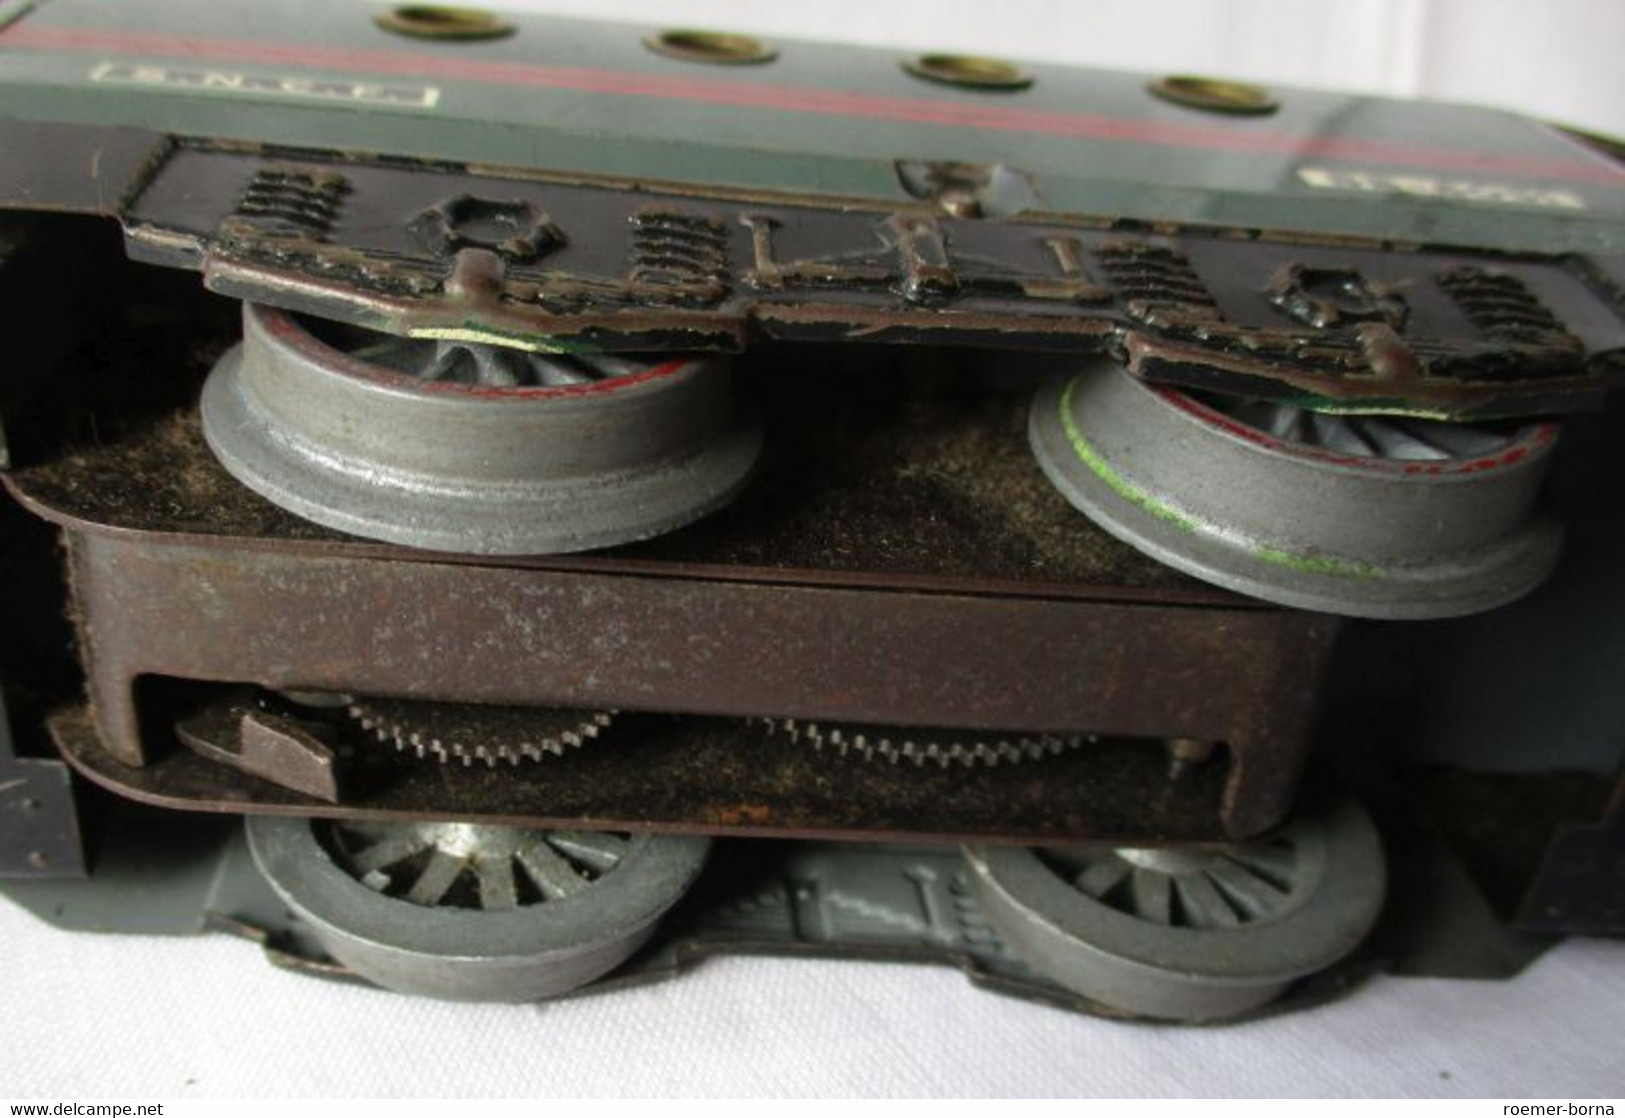 Modellbahn Konvolut Blech Spur 0 Lokomotive Hornby um 1940 OVP (102456)